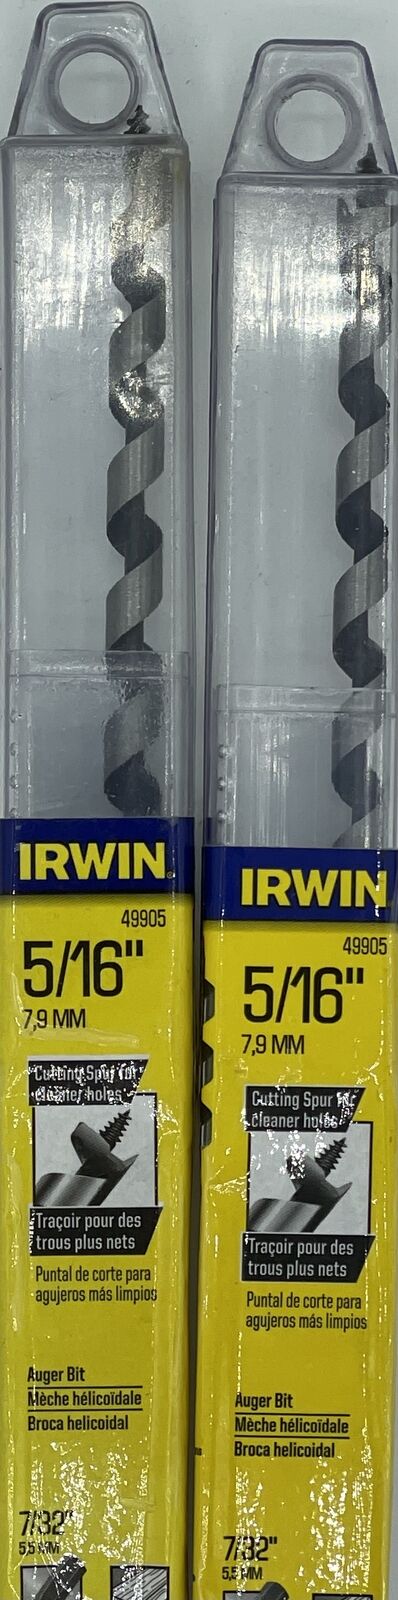 Irwin 49905 5/16